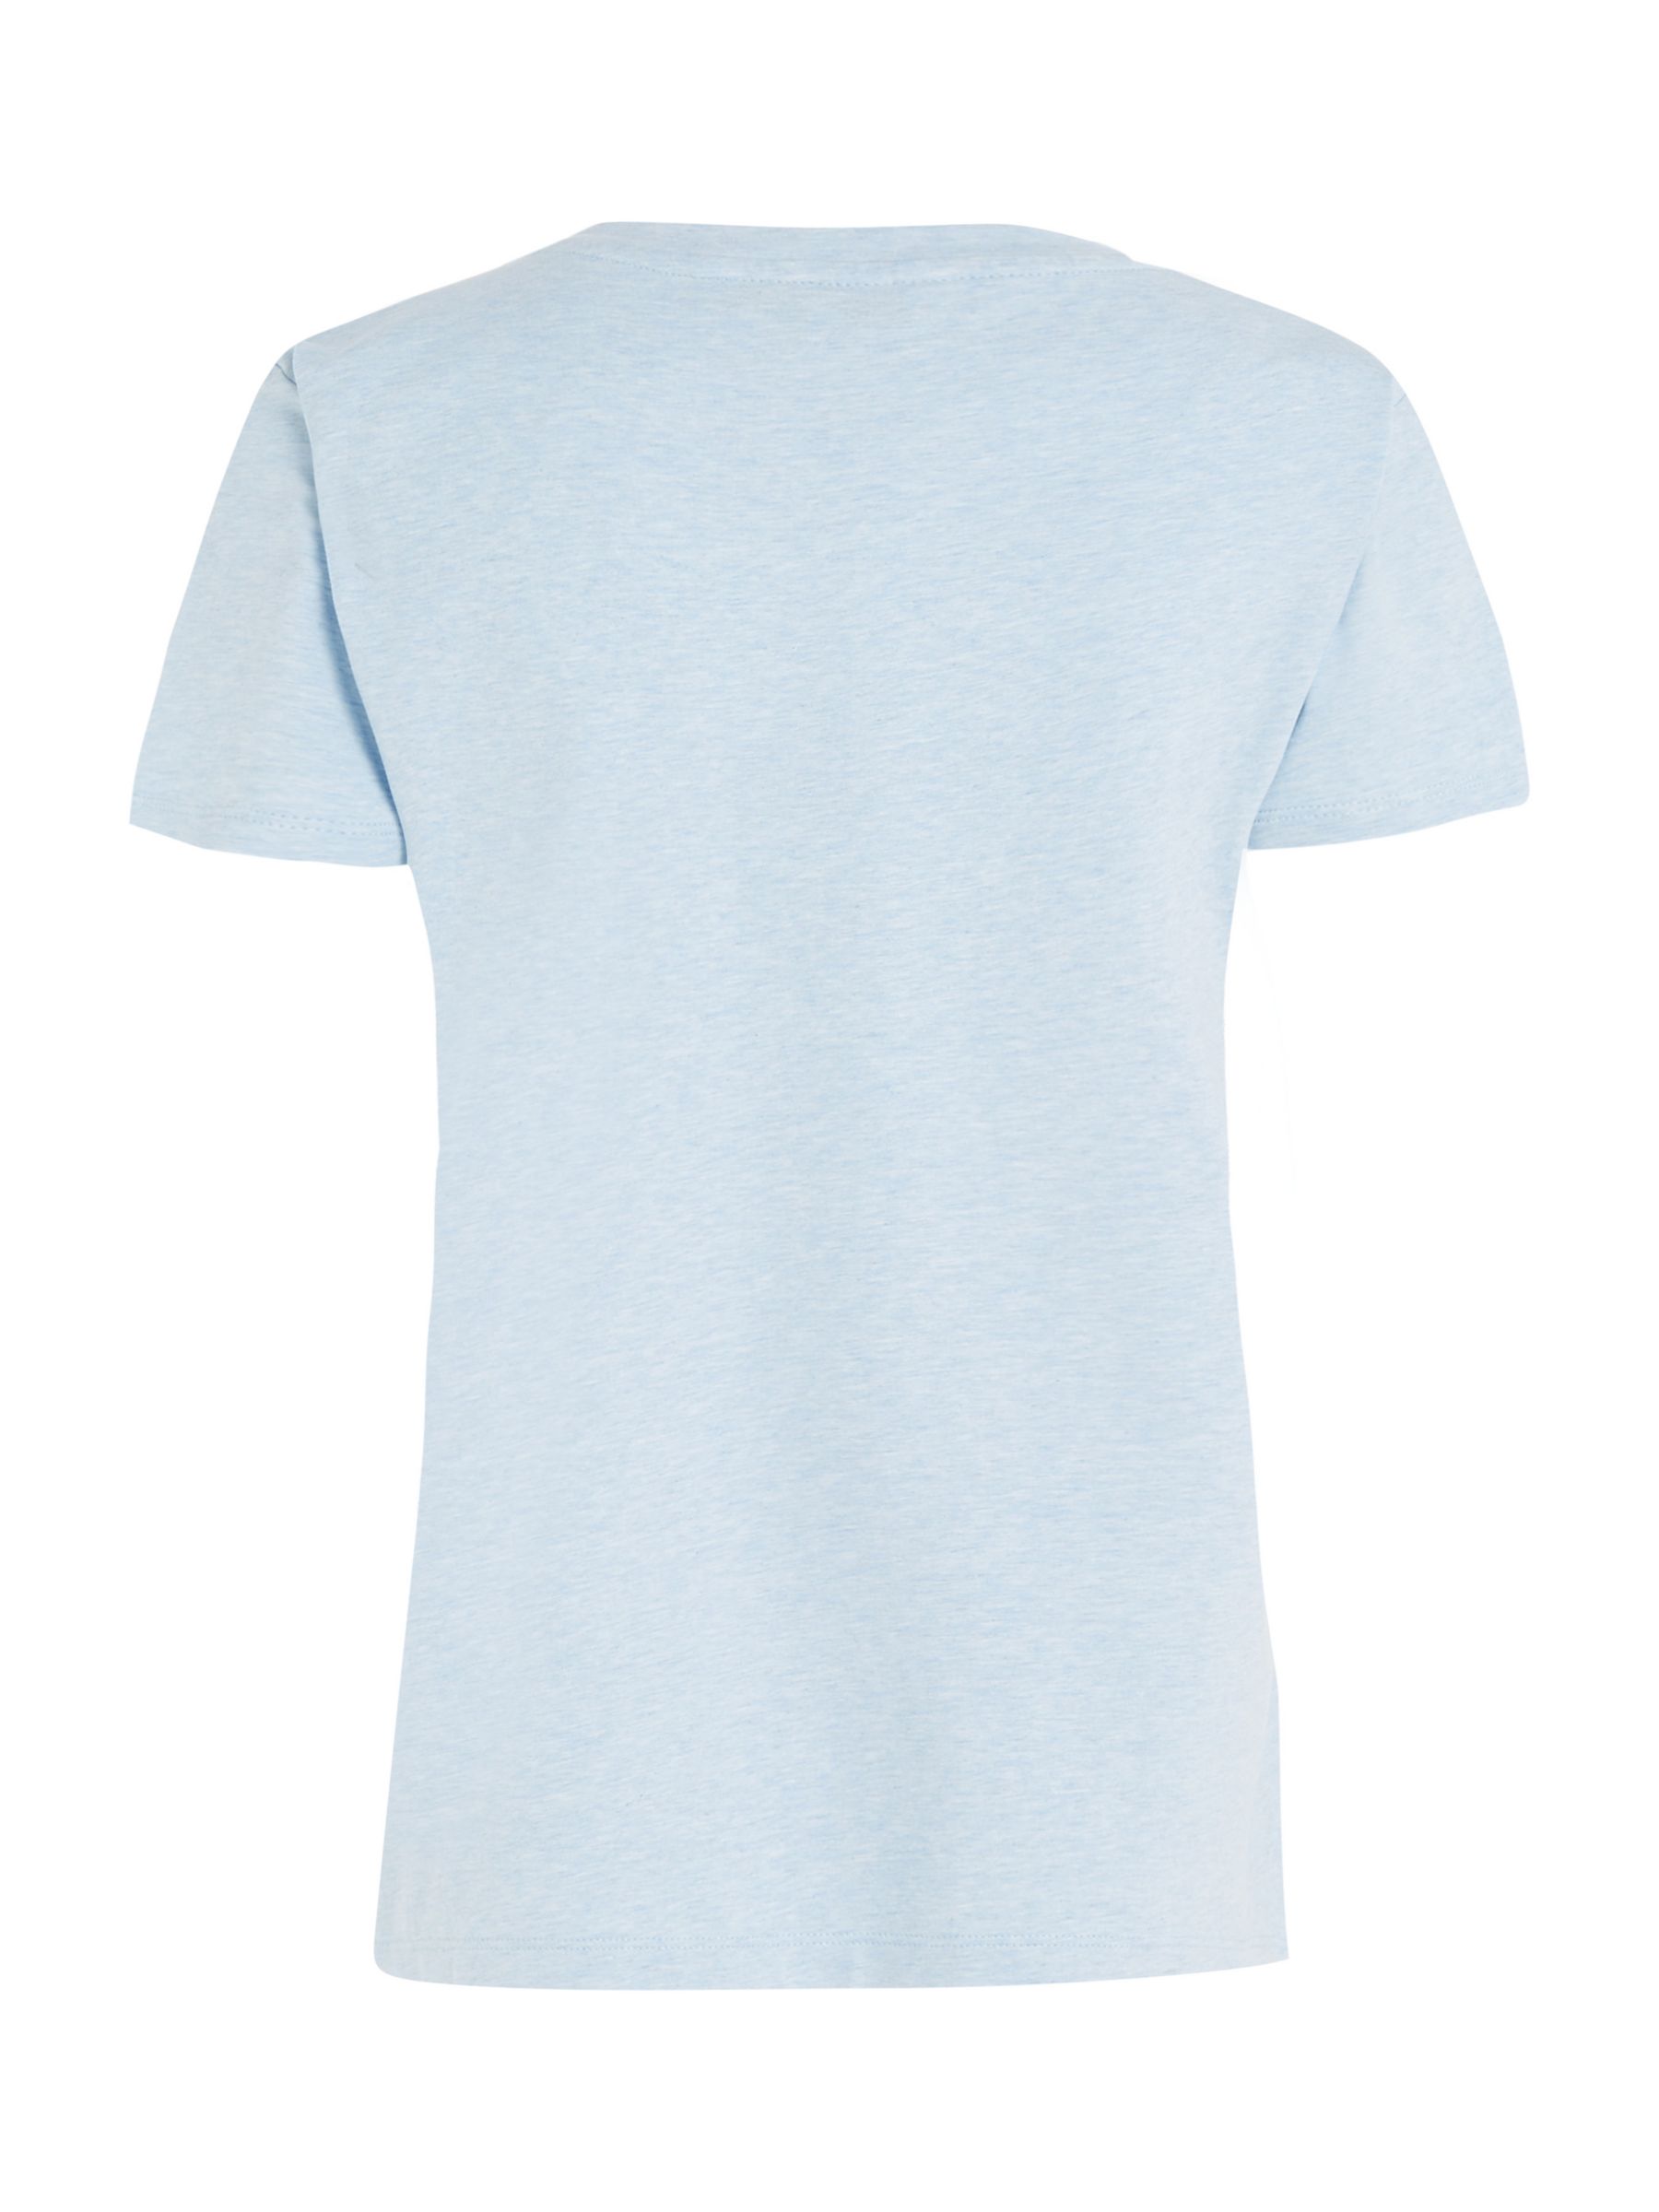 Buy Tommy Hilfiger Curve Organic Cotton Logo T-Shirt, Breezy Blue Heather Online at johnlewis.com